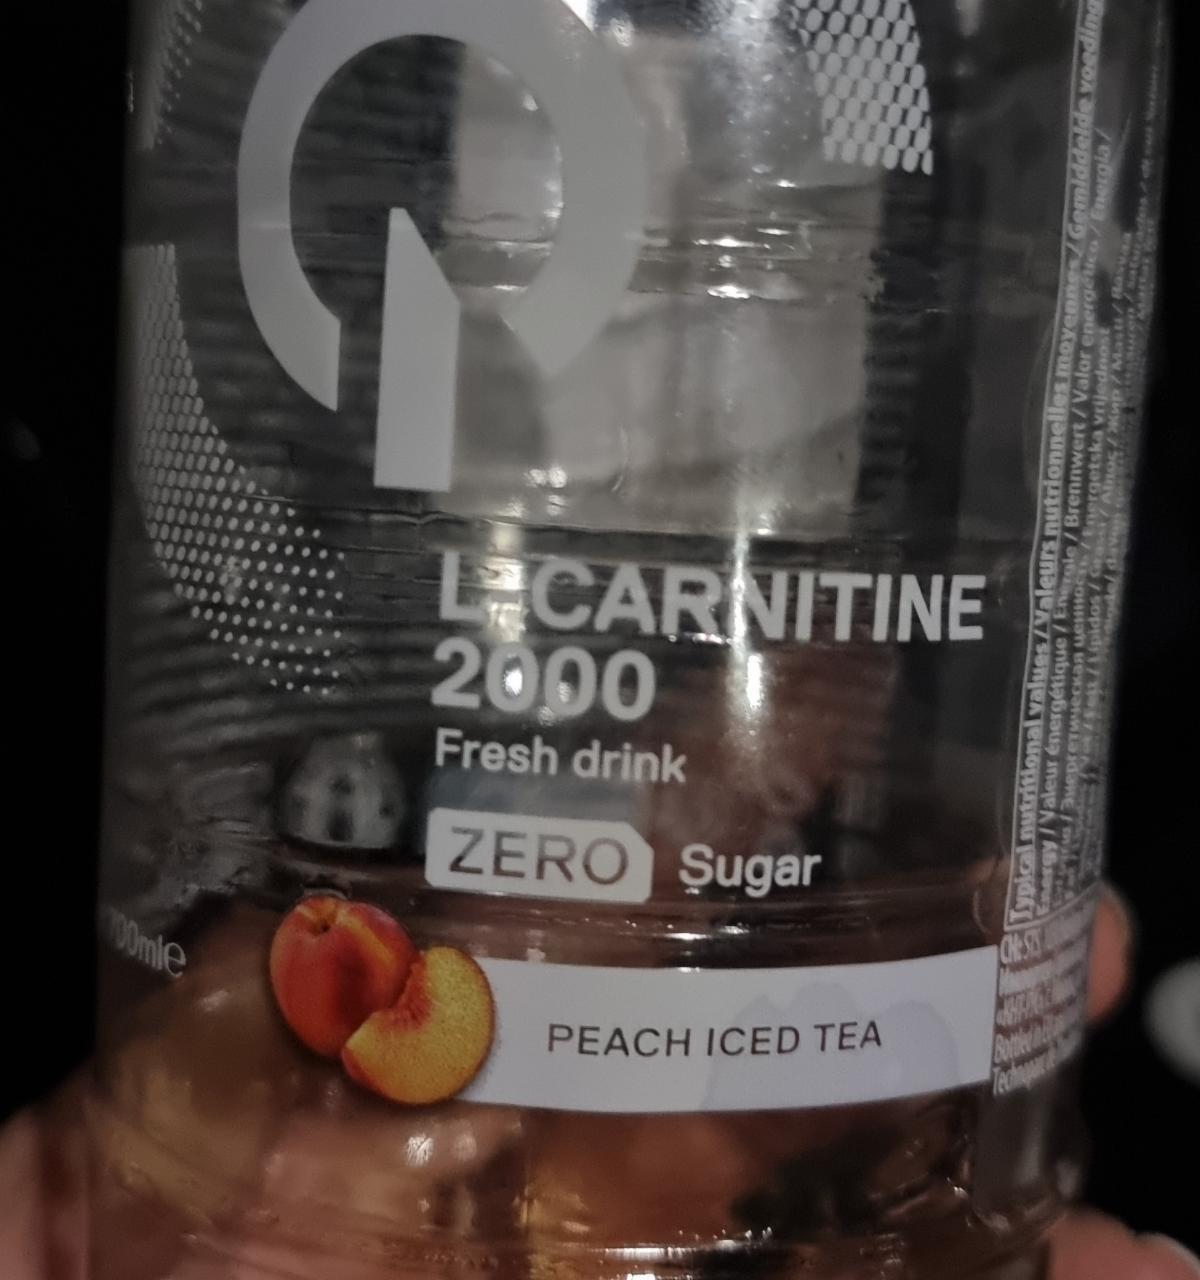 Fotografie - L-Carnitine 2000 Fresh drink zero sugar Peach iced tea QNT